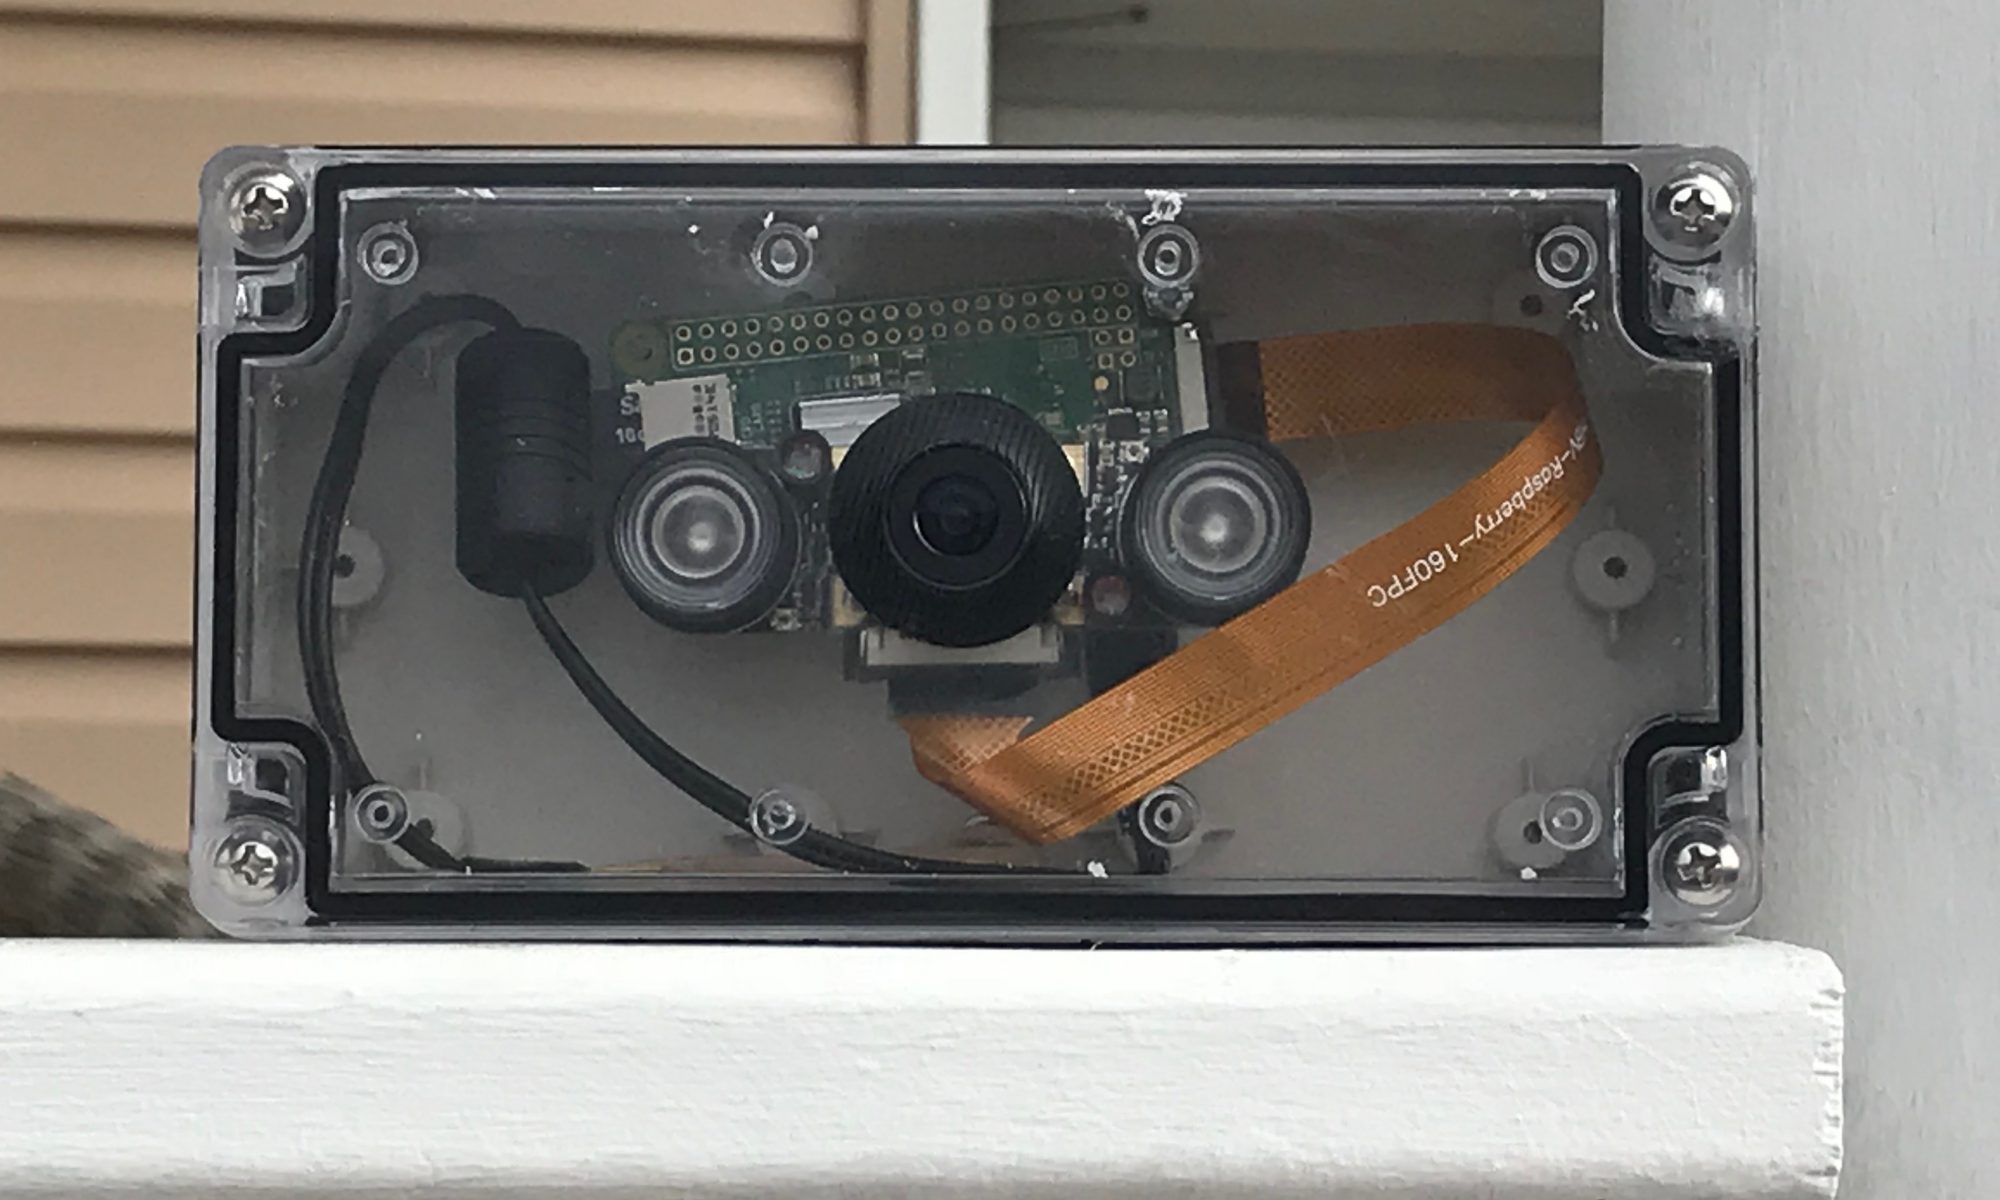 pi zero surveillance camera